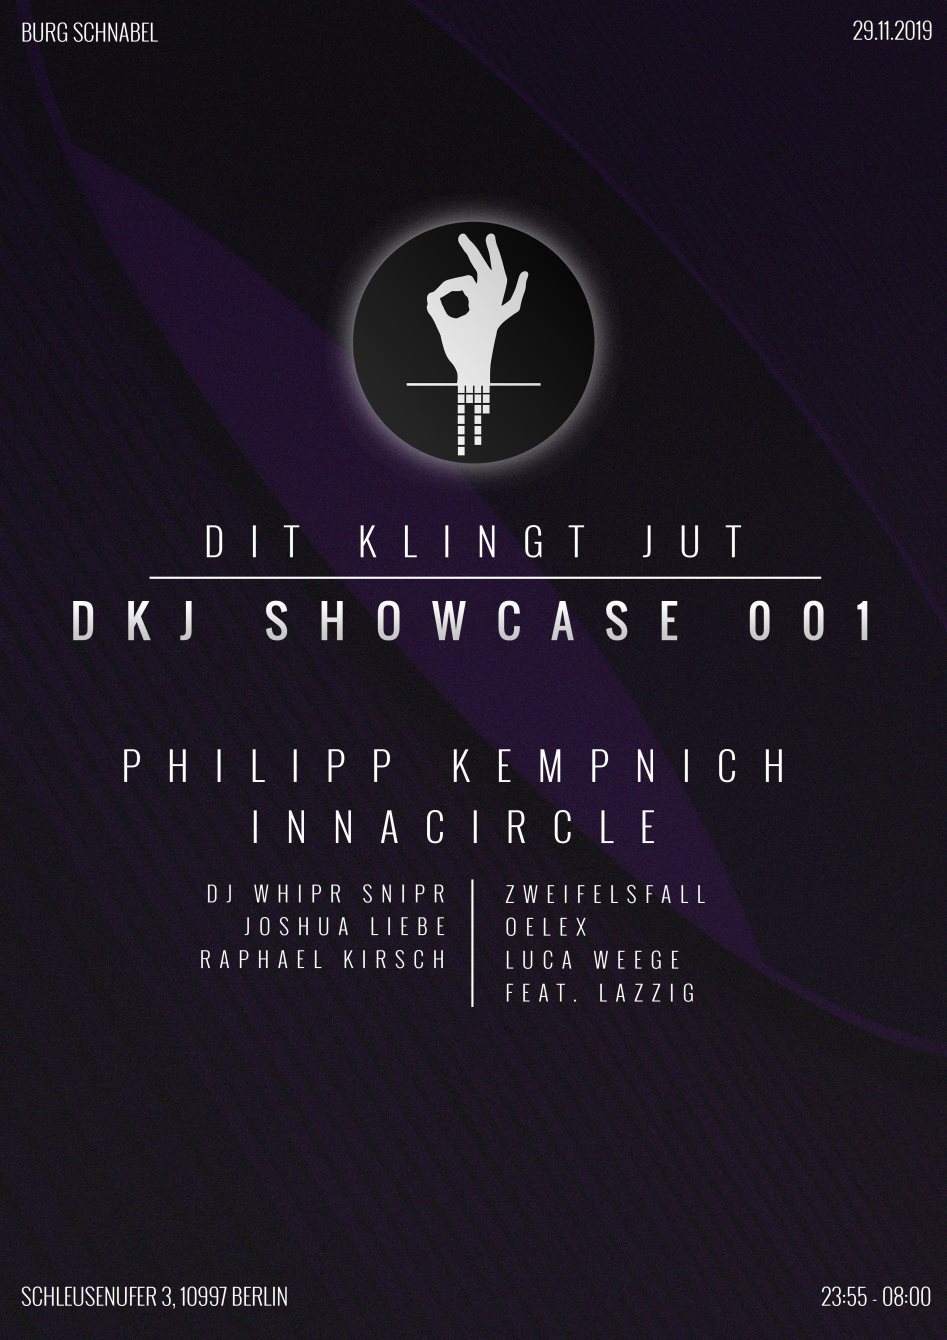 Dit Klingt Jut Showcase 001 with Philipp Kempnich & Innacircle - フライヤー表